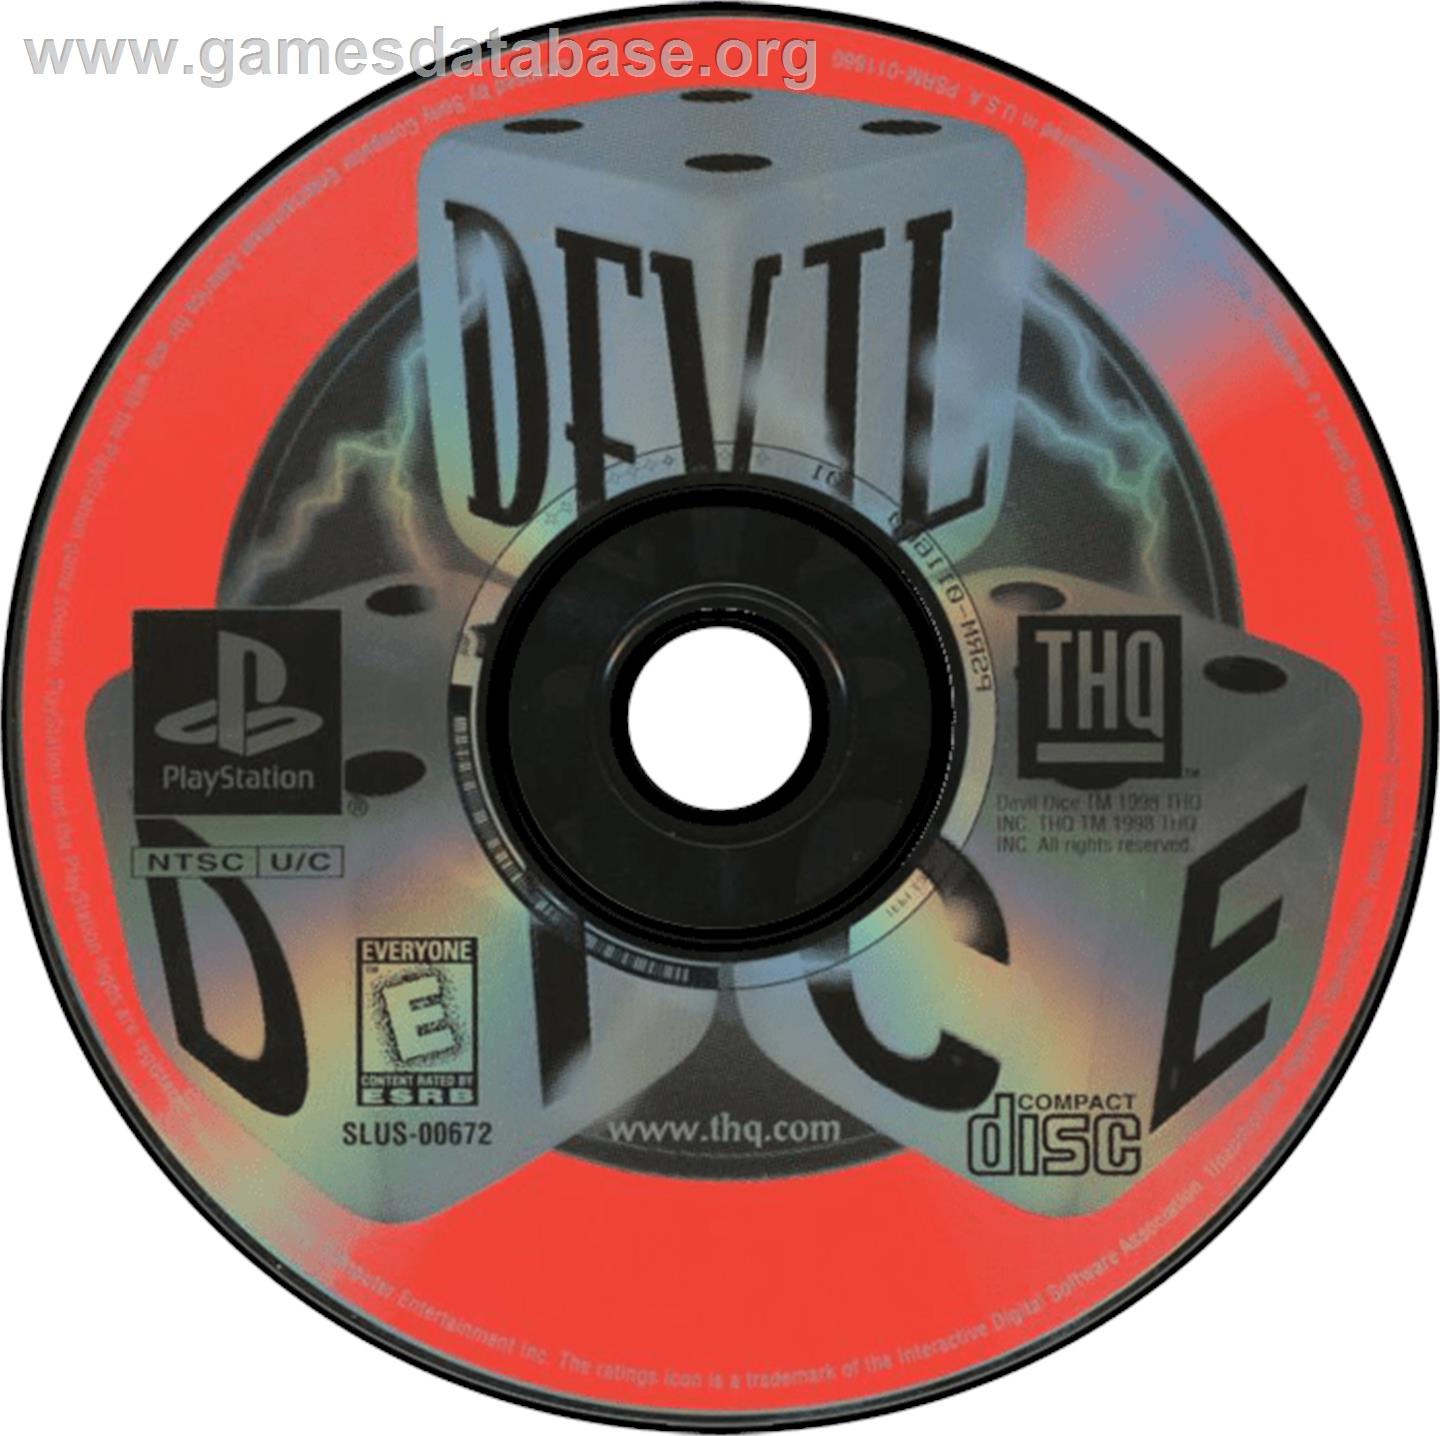 Devil Dice - Sony Playstation - Artwork - Disc